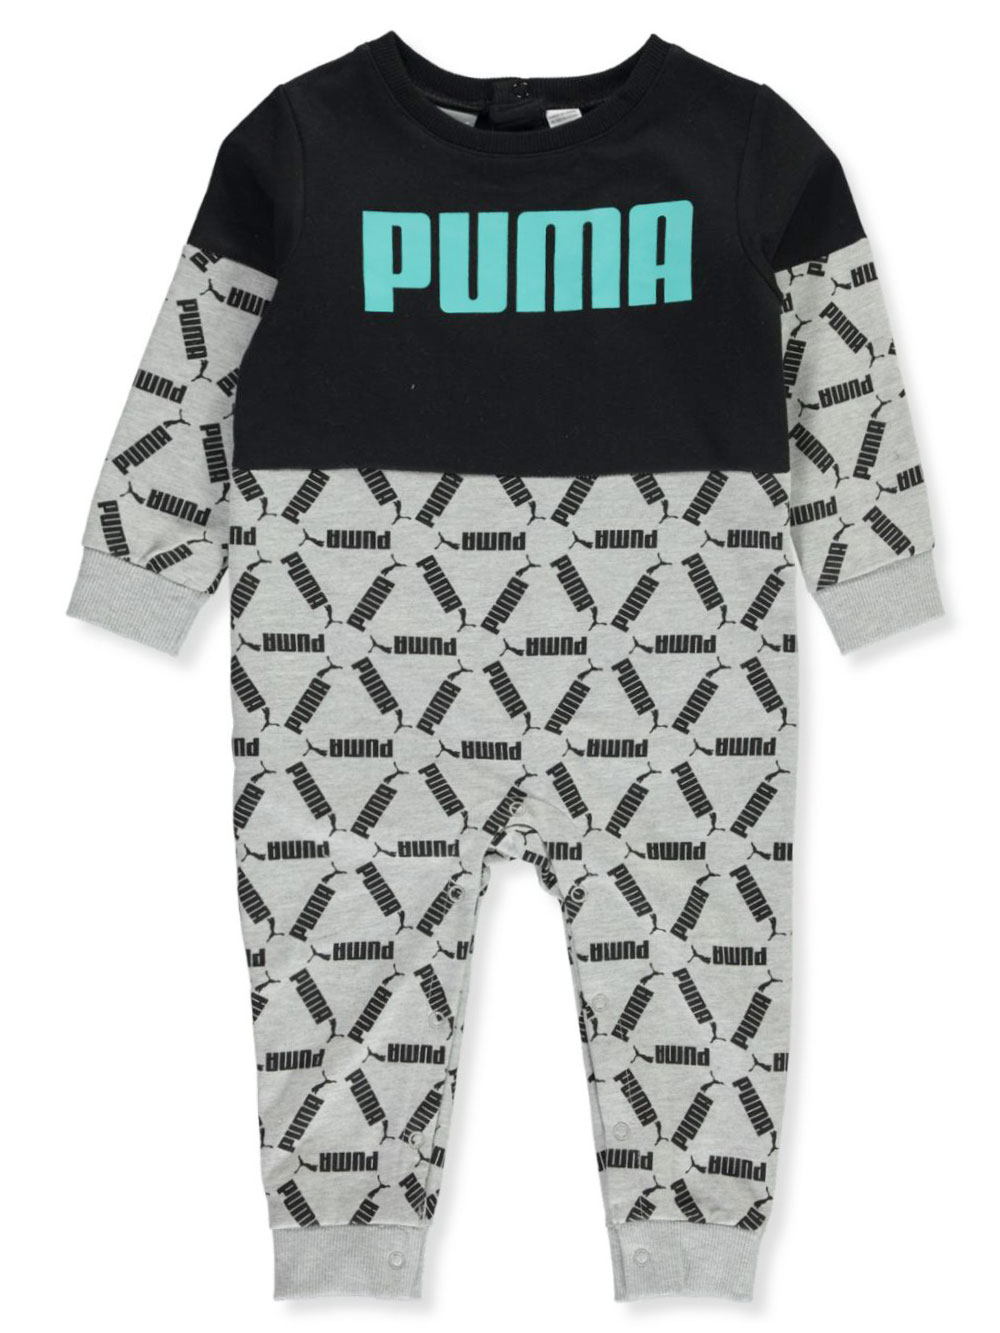 puma infant apparel